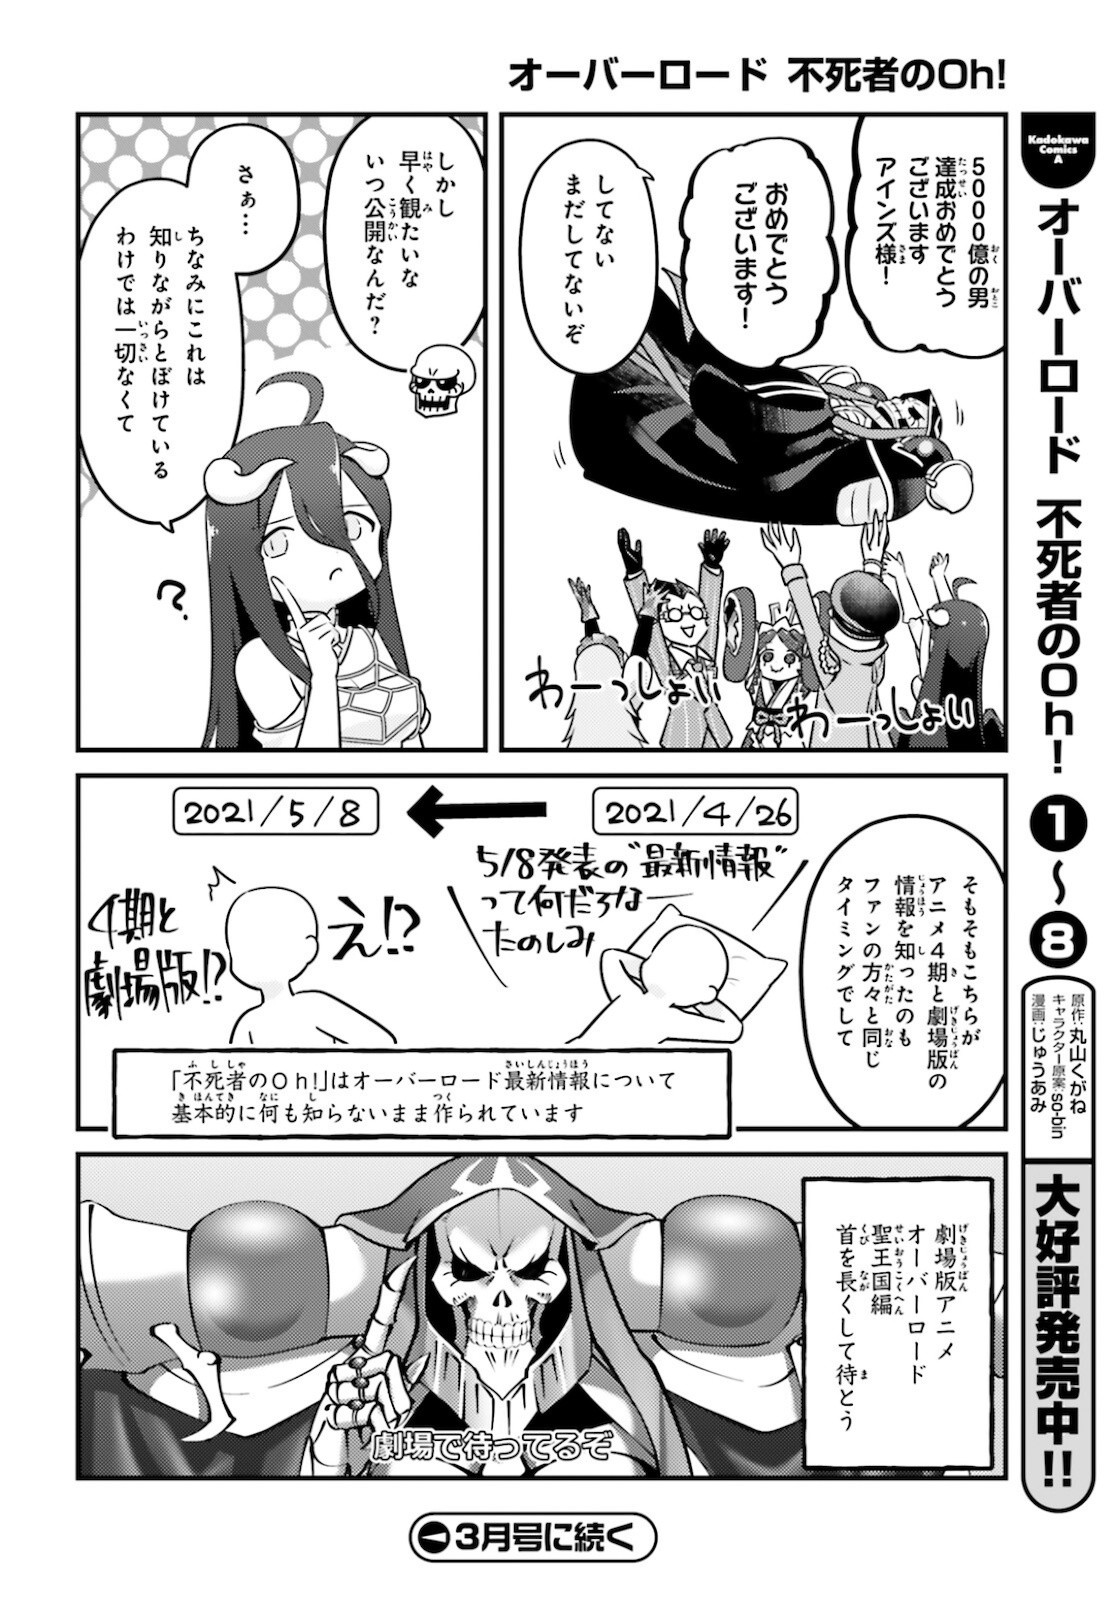 Overlord-Fushisha-no-Oh - Chapter 54 - Page 20